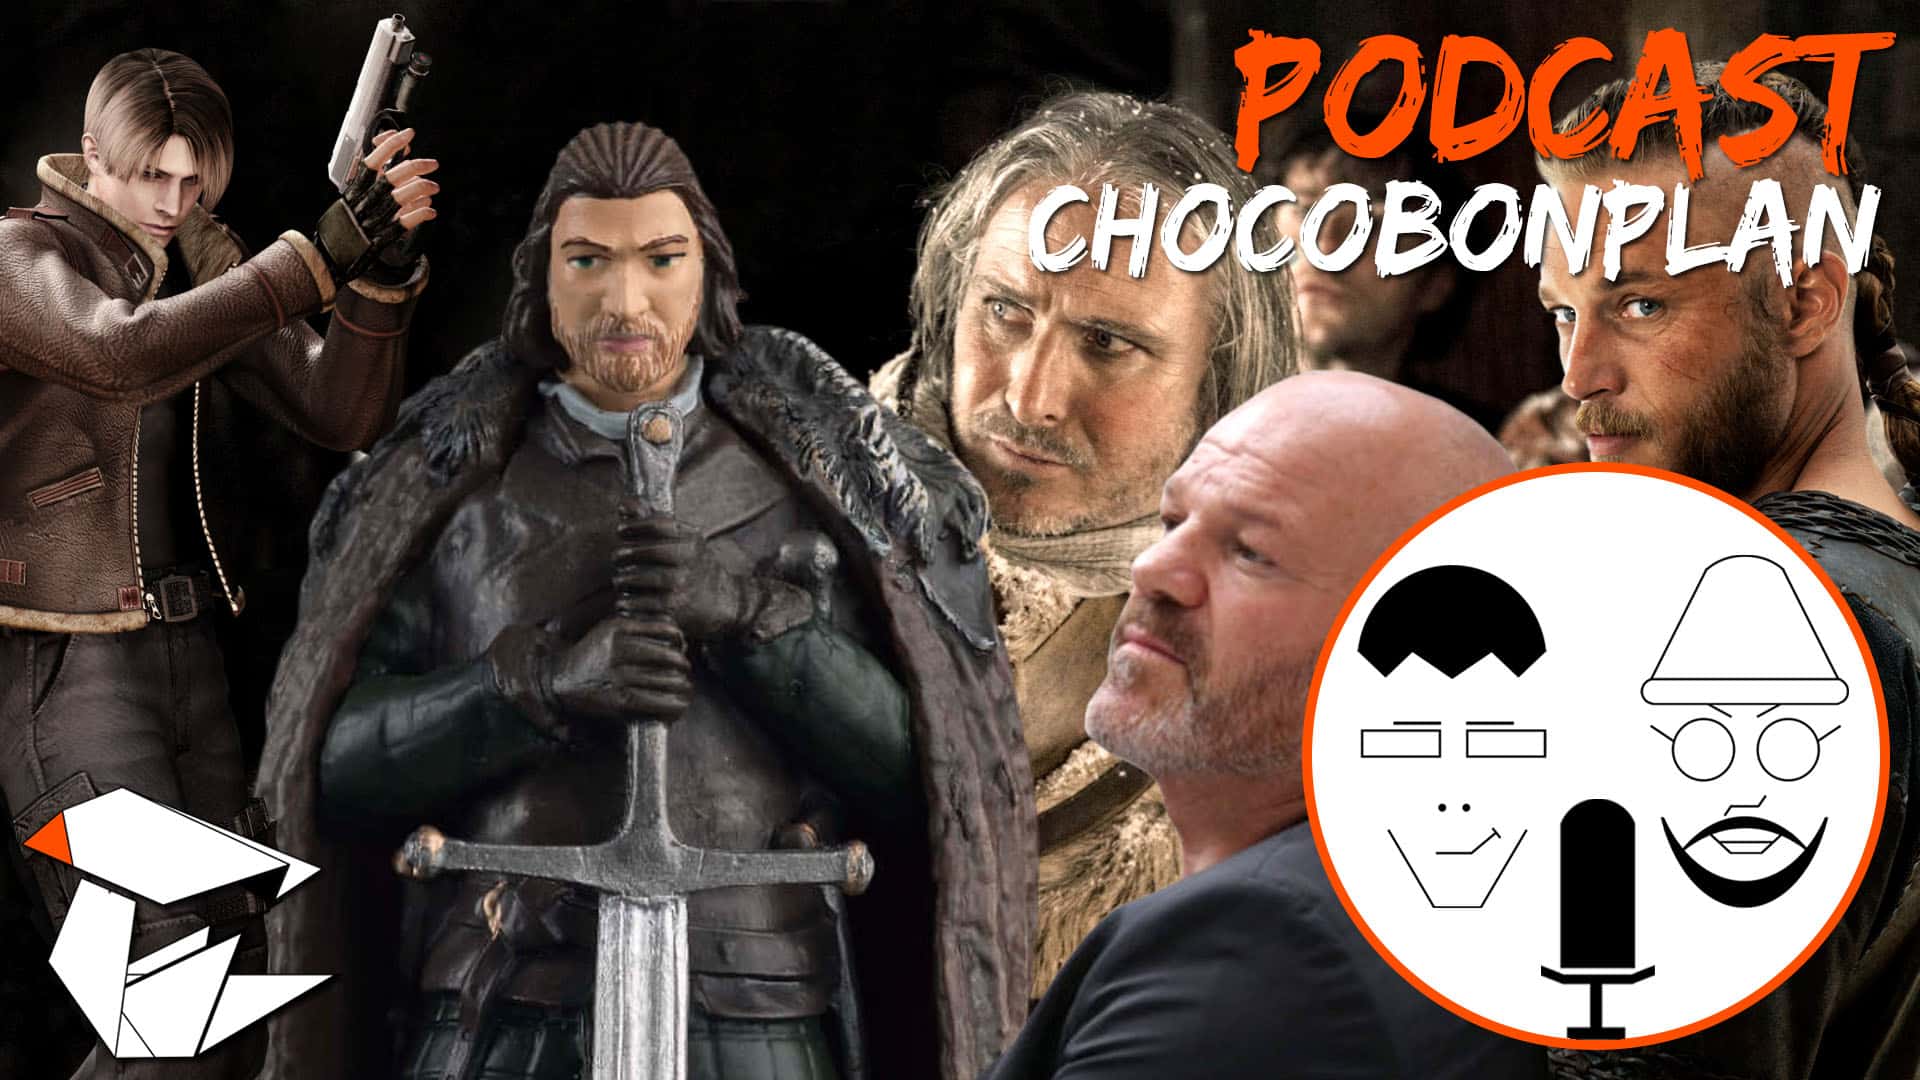 podcast chocobonplan visuel 19 04 20